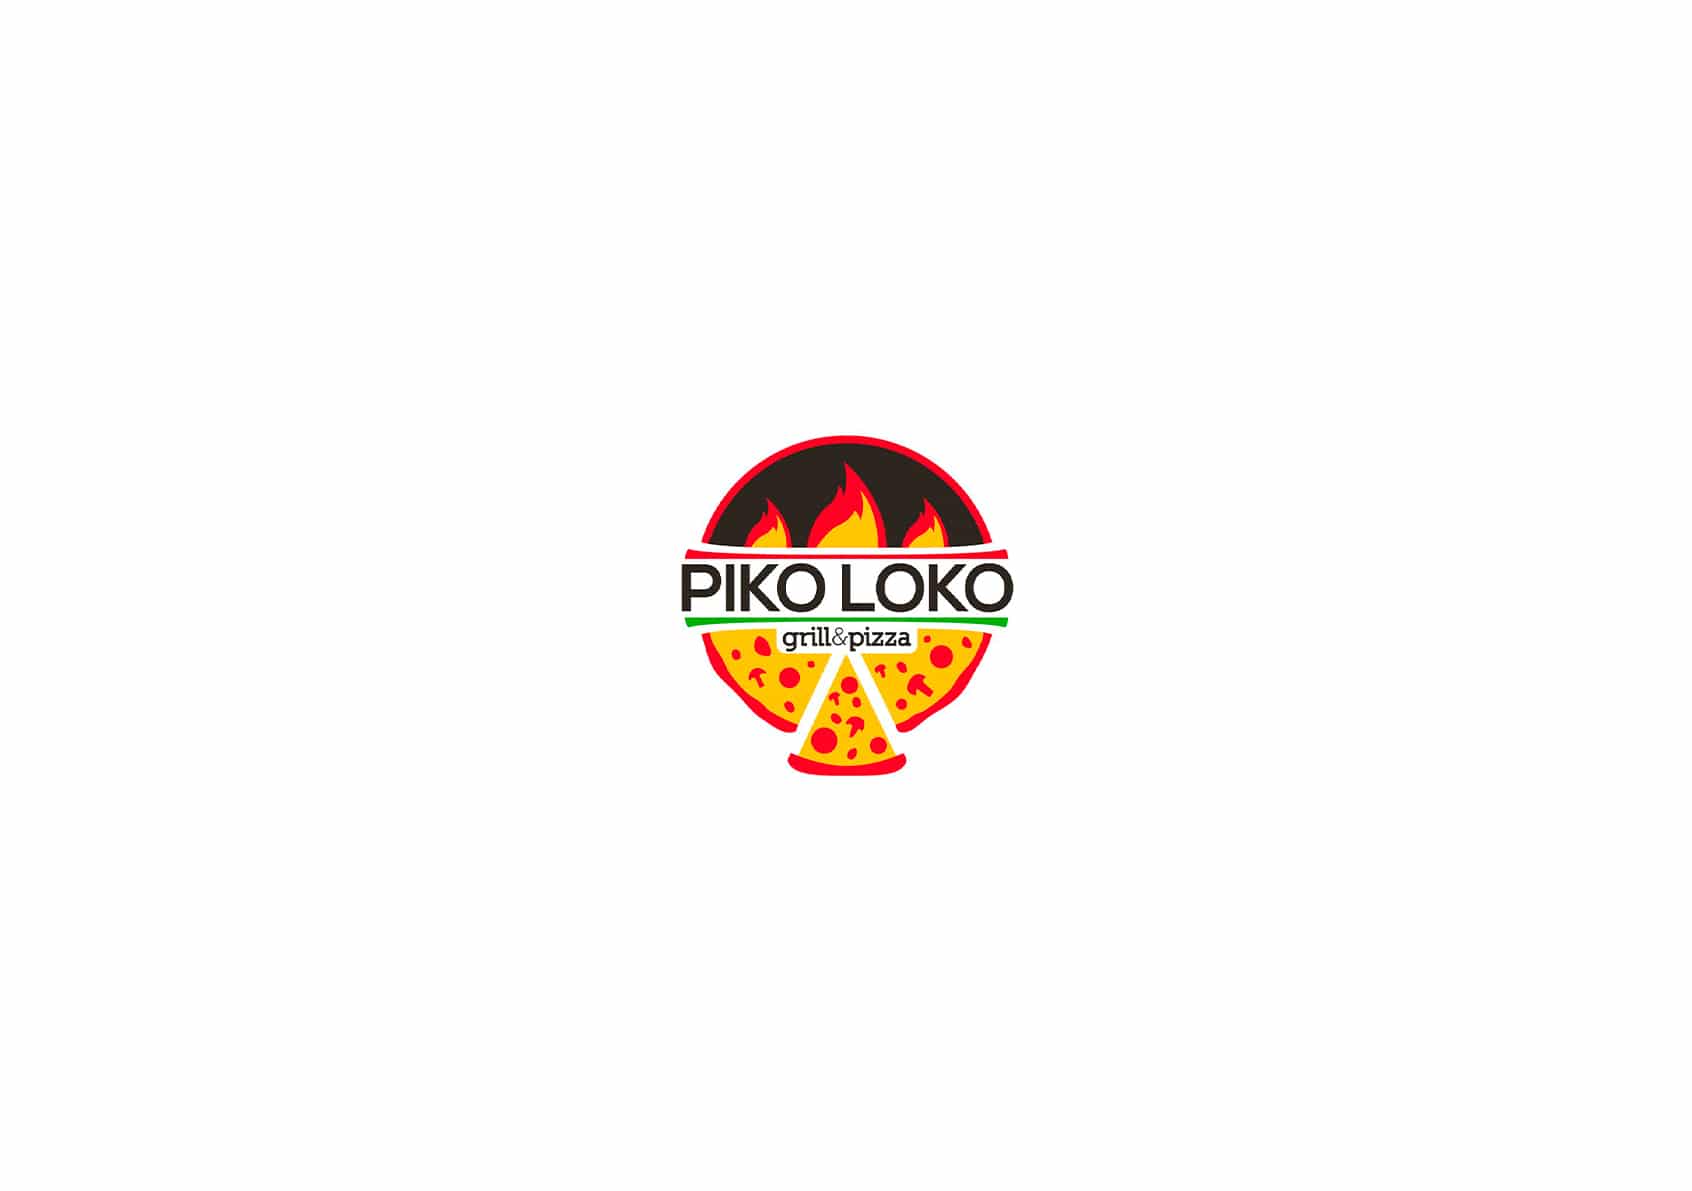 logo piko loko - inova3 - Marketing digital desde ourense